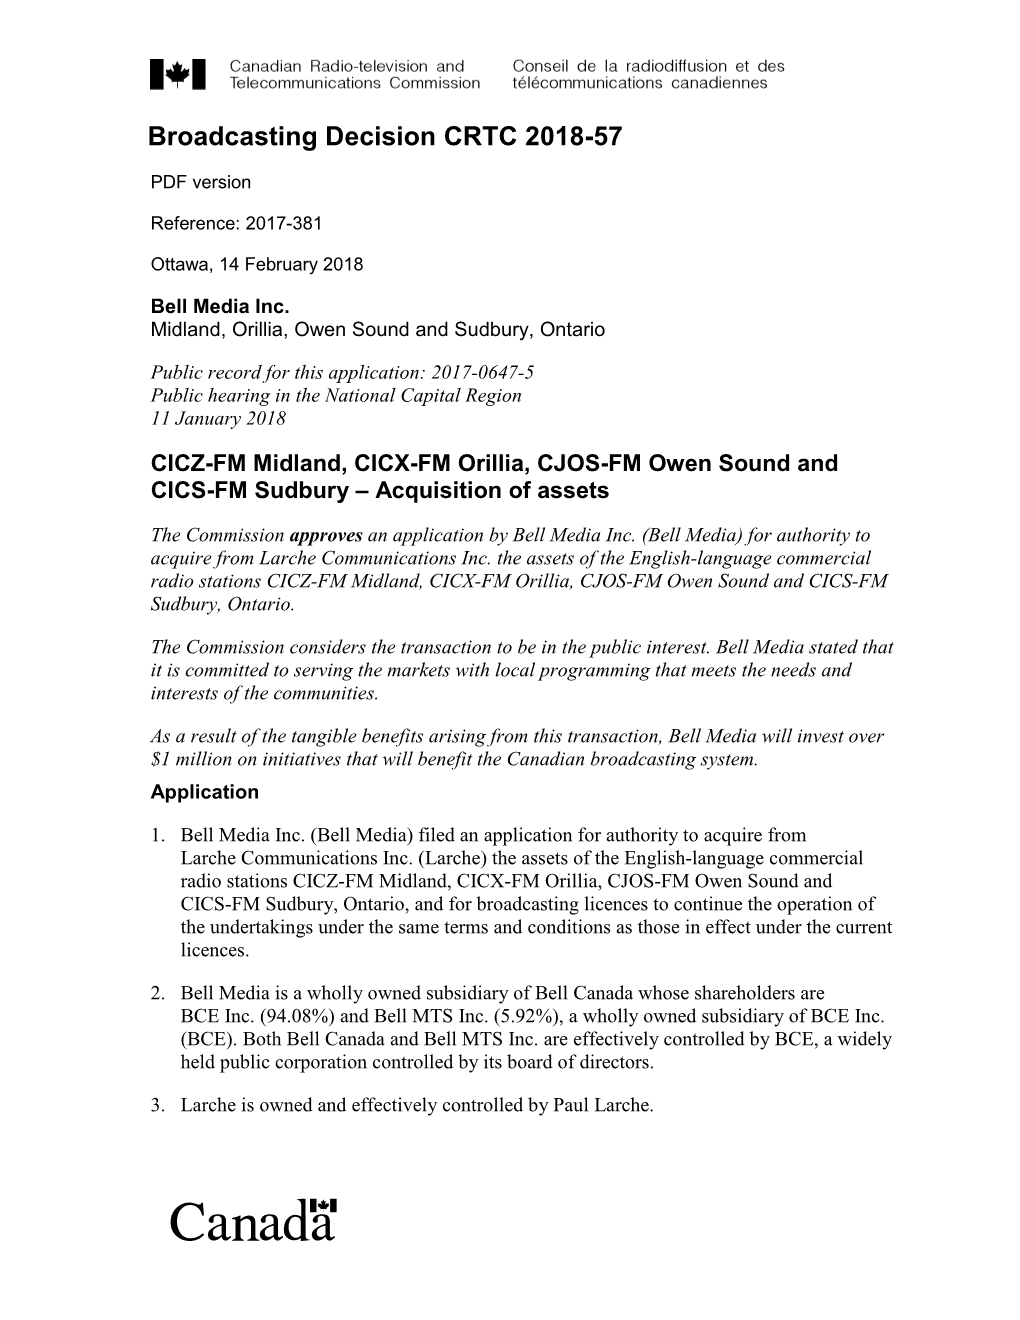 CICZ-FM Midland, CICX-FM Orillia, CJOS-FM Owen Sound and CICS-FM Sudbury – Acquisition of Assets